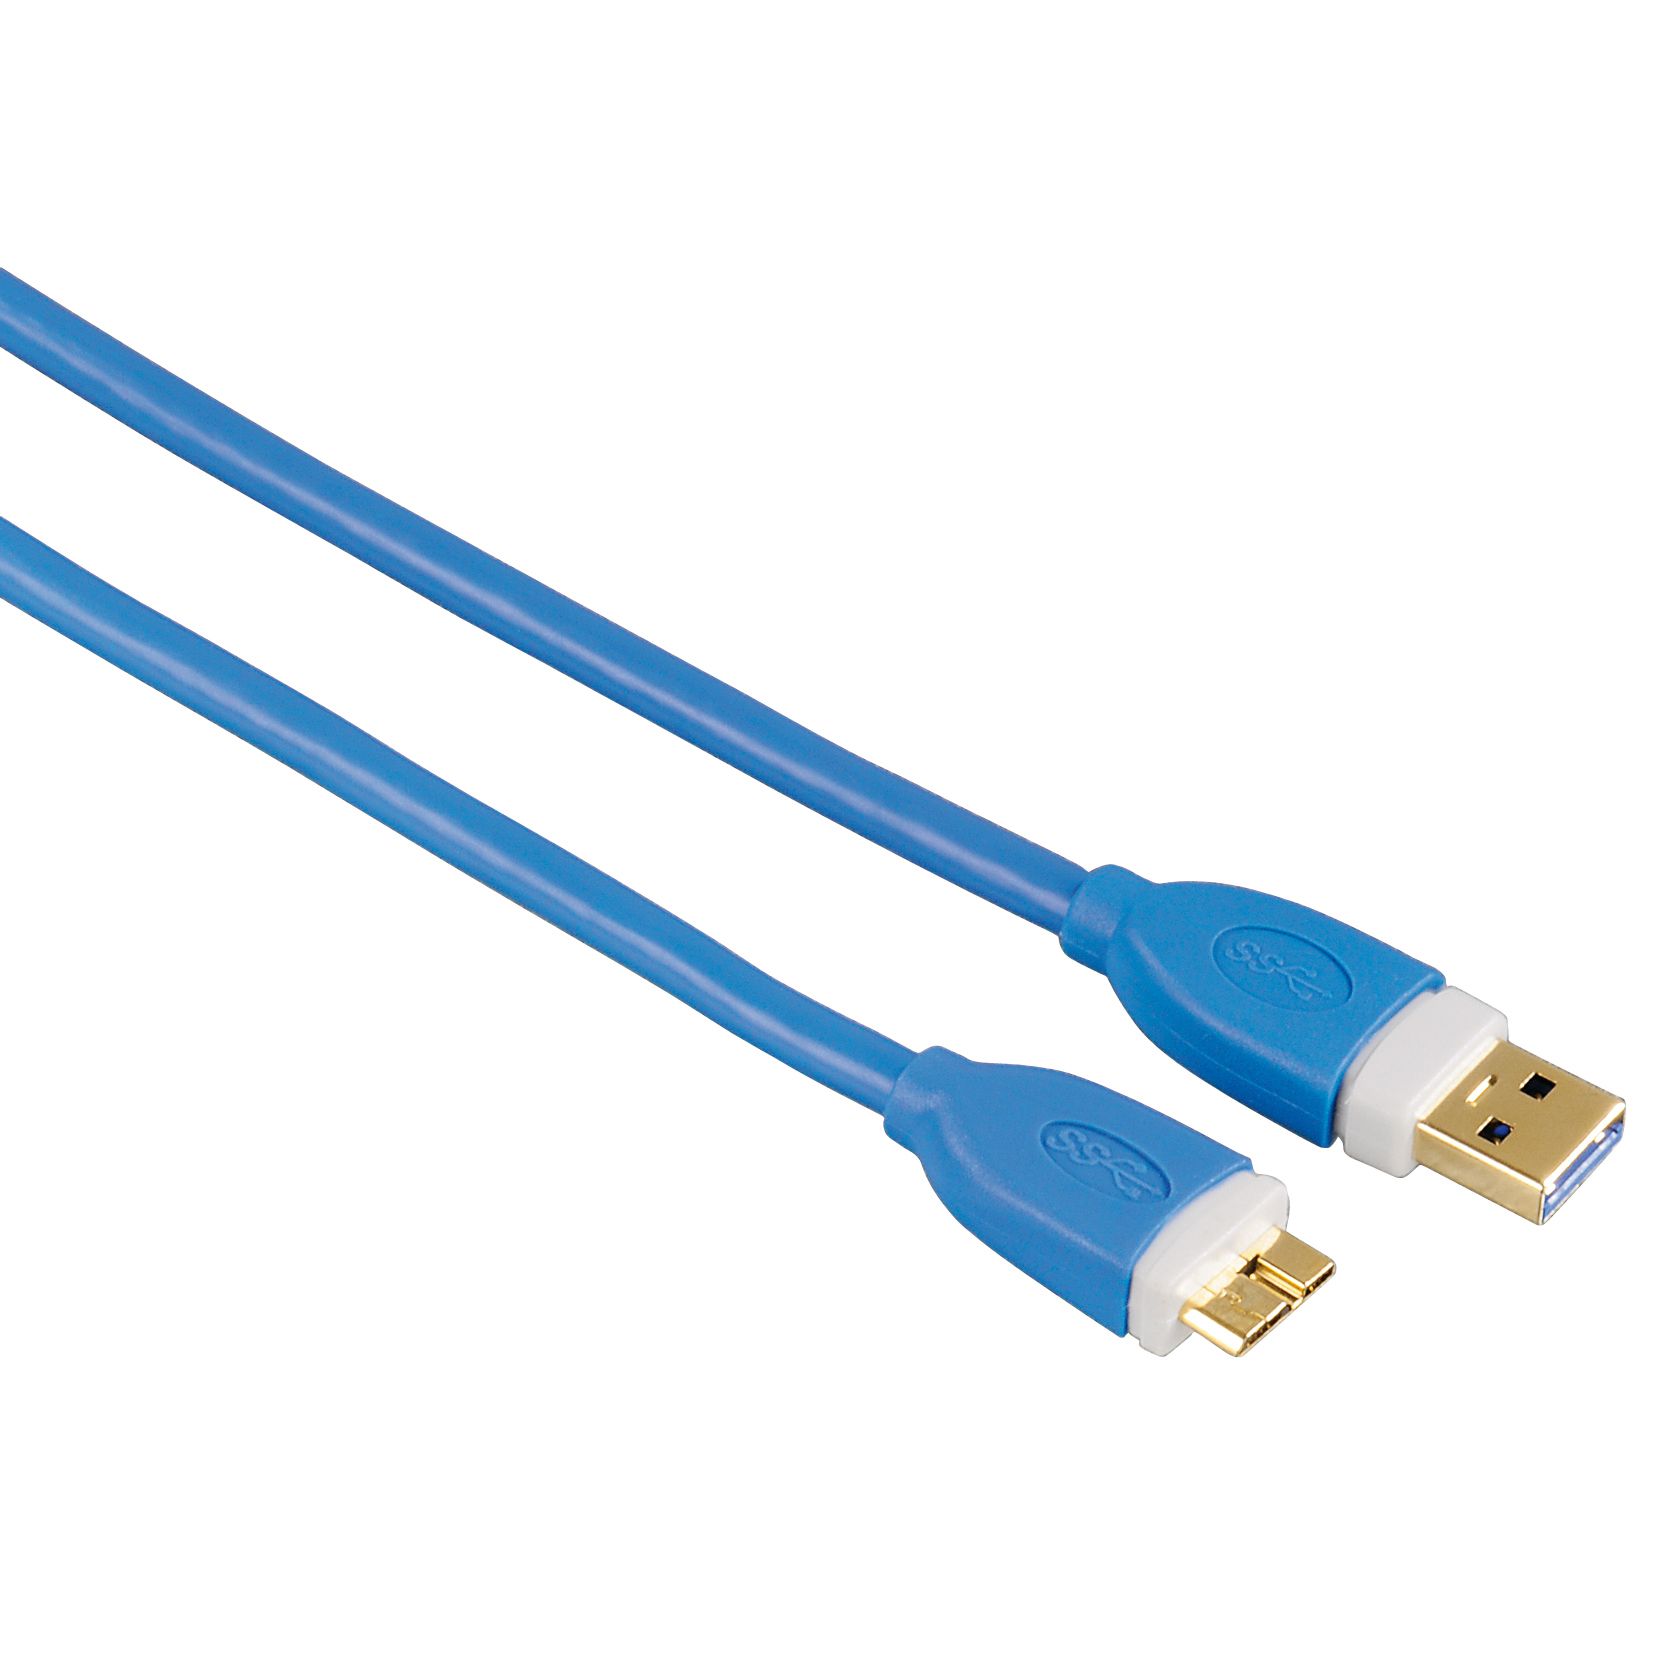  Cablu Hama 39682 Micro USB 3.0, Gold-plated, dublu ecranat, Albastru 